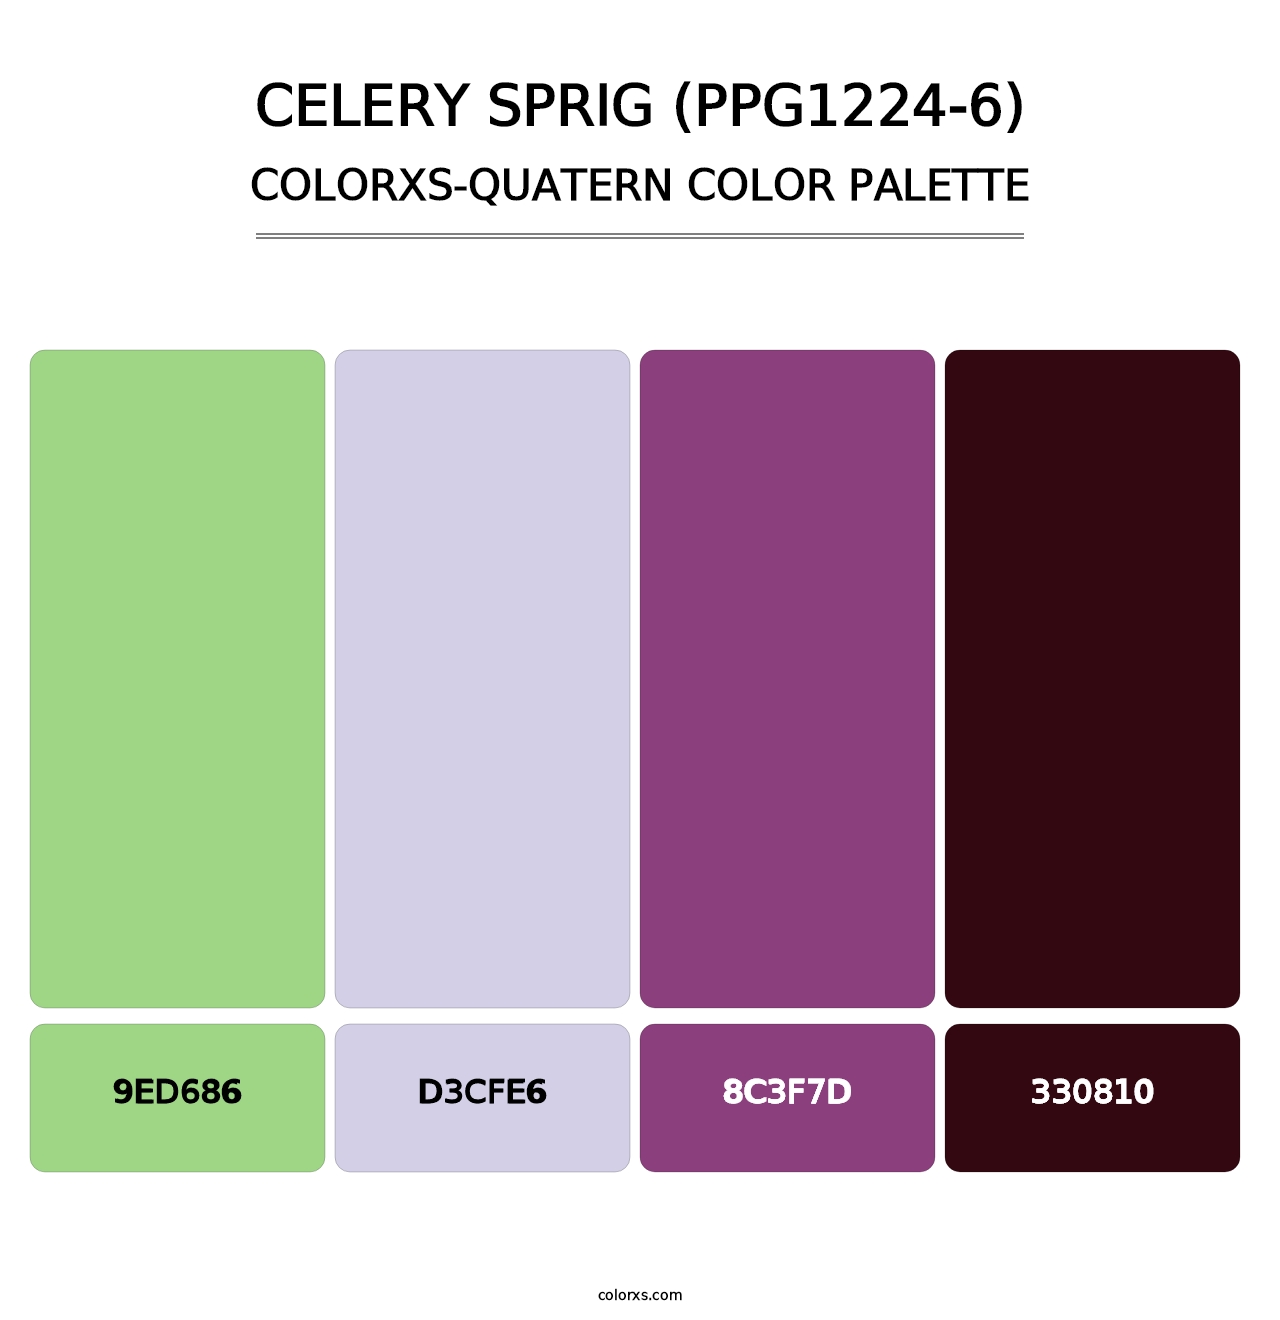 Celery Sprig (PPG1224-6) - Colorxs Quatern Palette